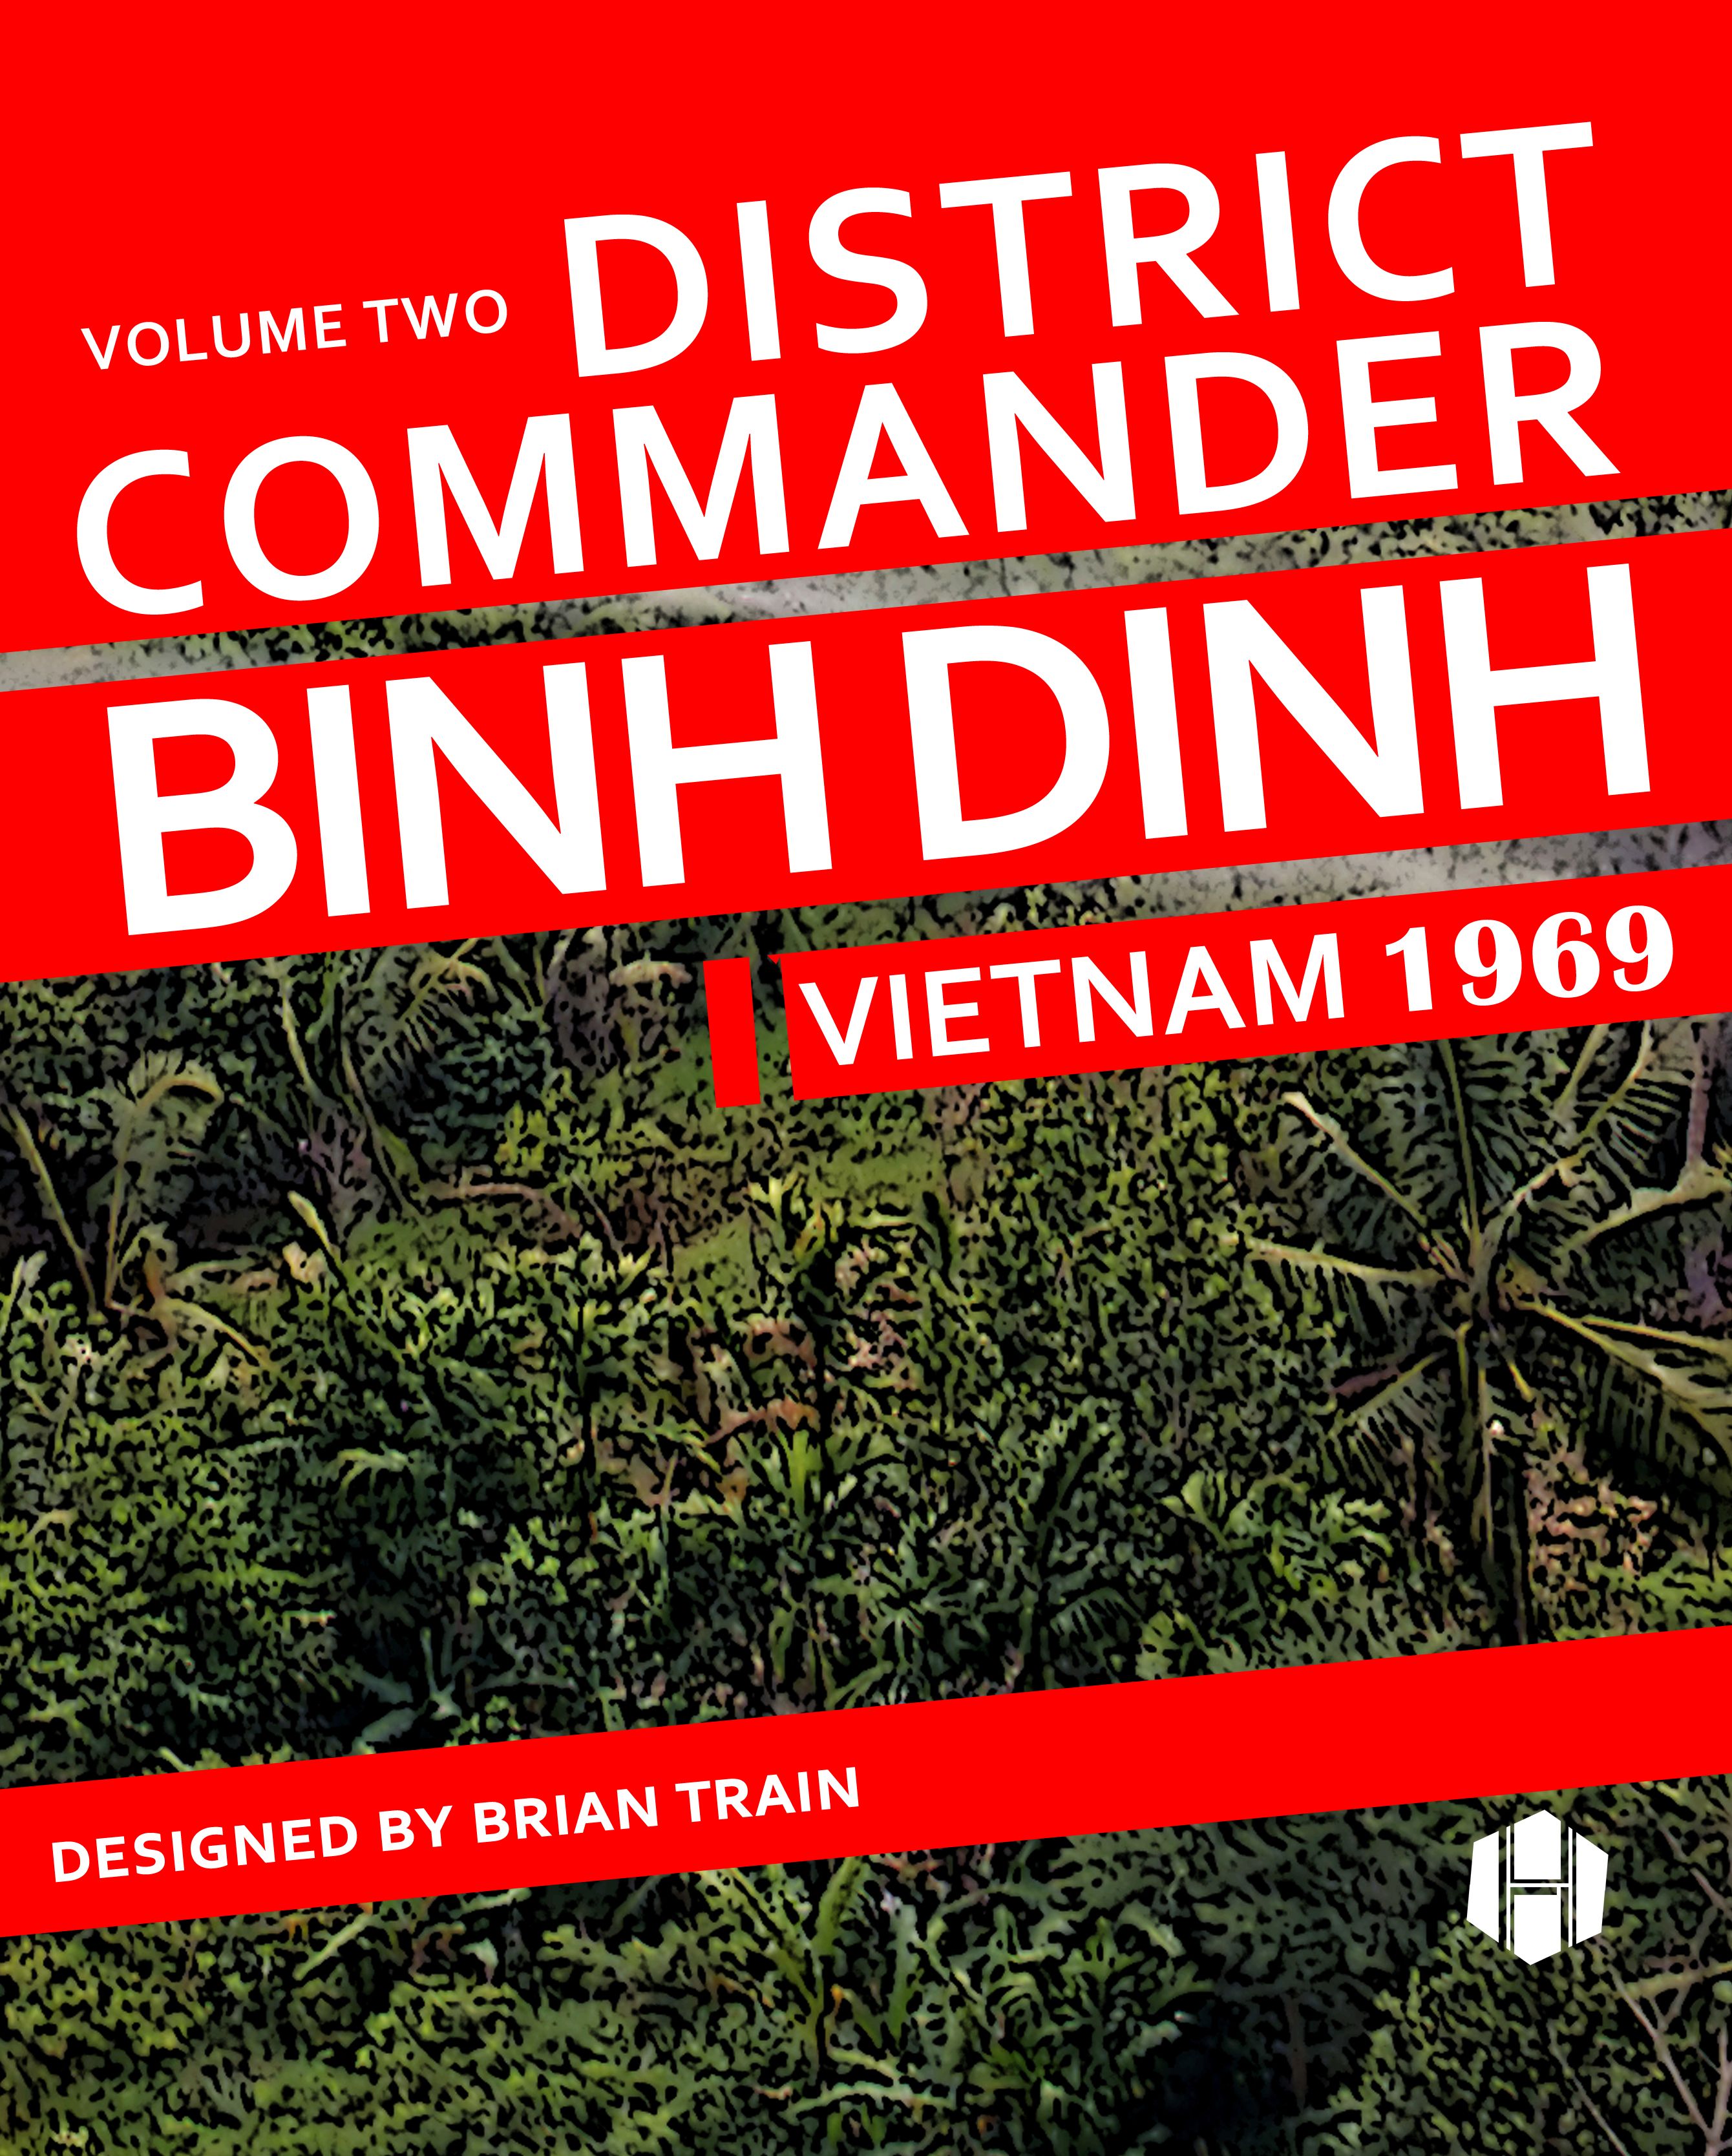 District Commander Binh Dinh: Vietnam 1969